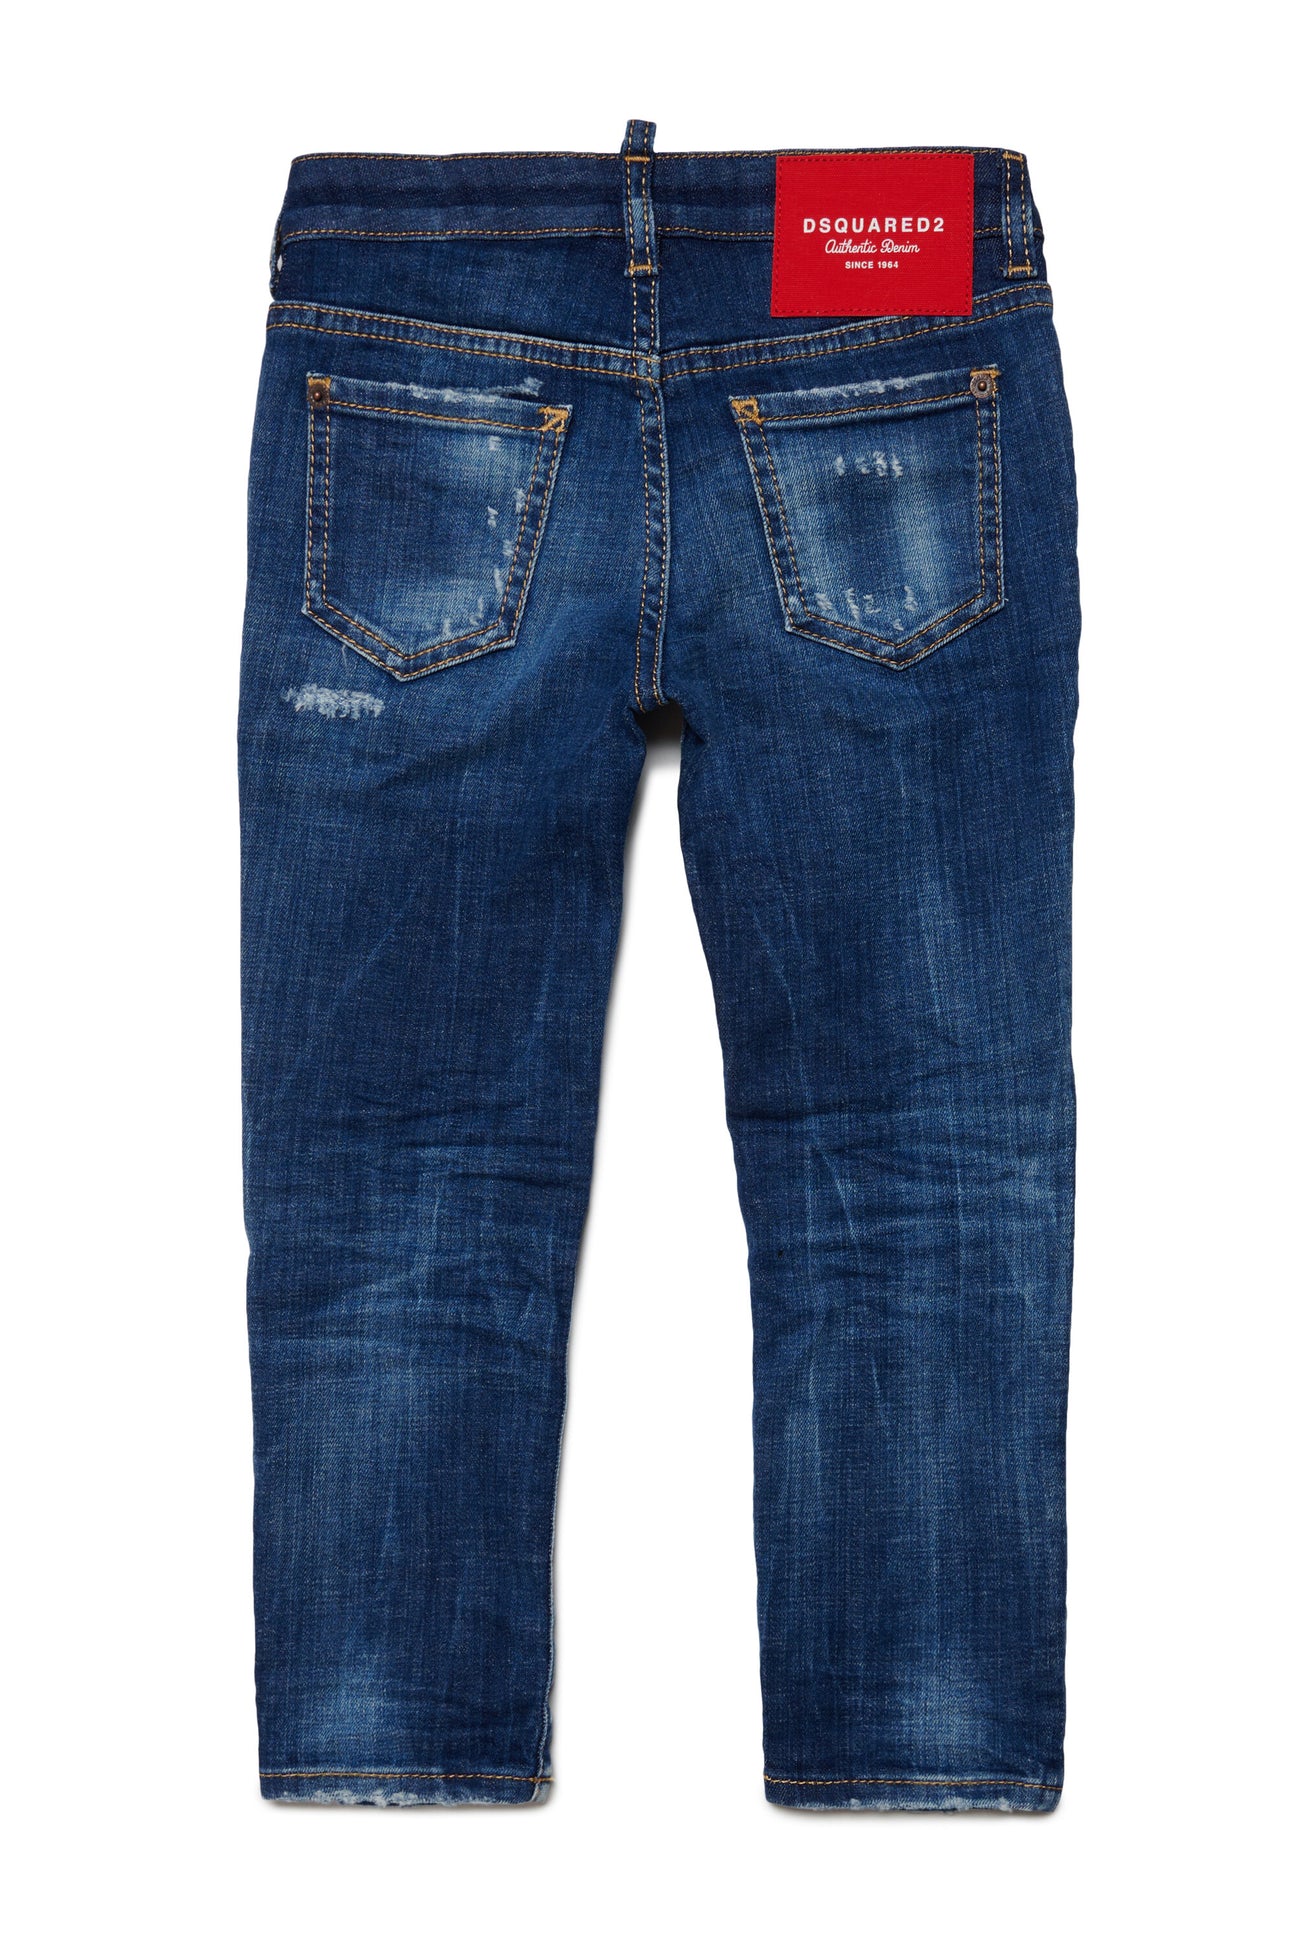 Jeans skinny blu sfumato con rotture - Jennifer Cropped Jeans skinny blu sfumato con rotture - Jennifer Cropped